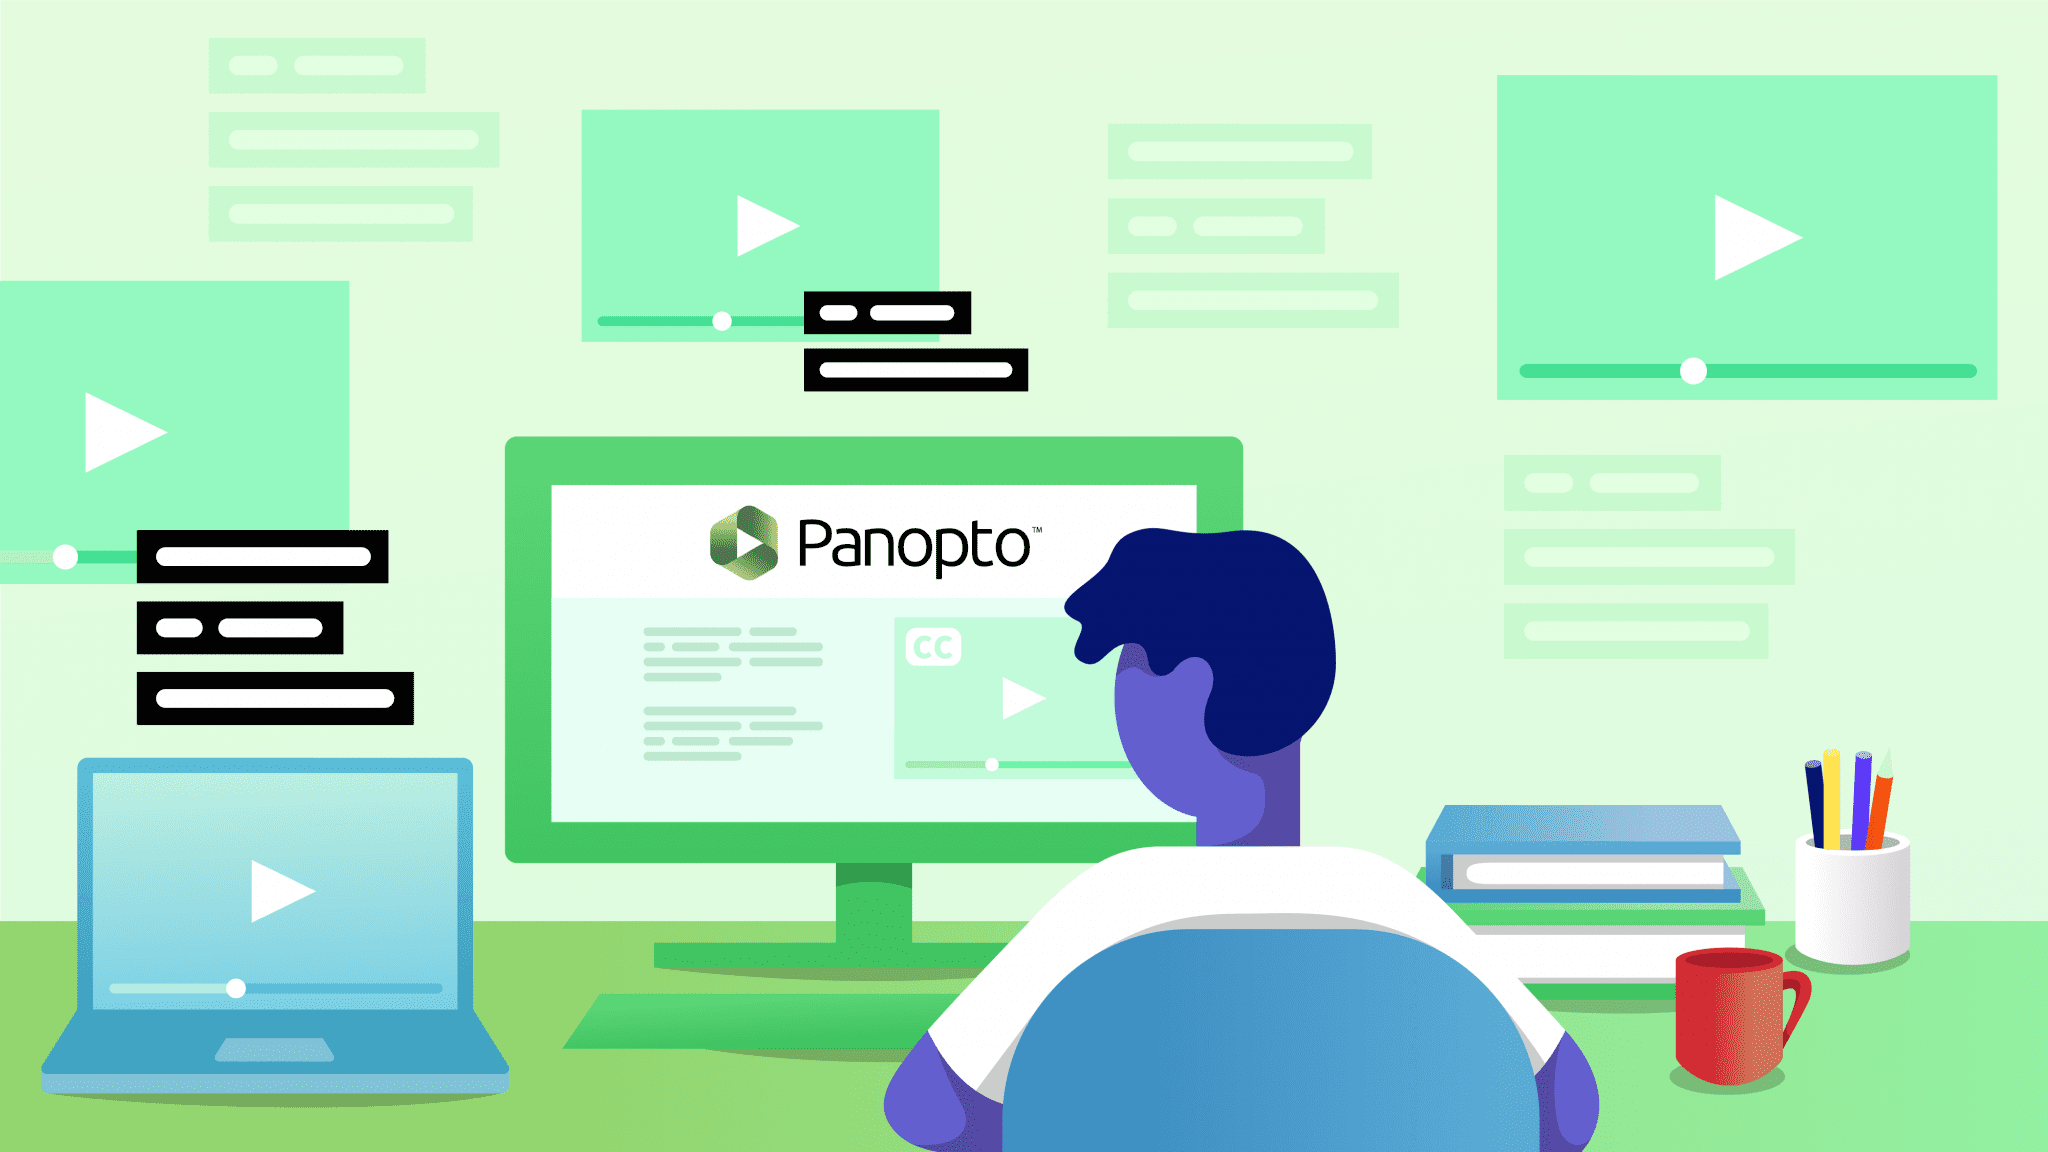 Image of man using Panopto software